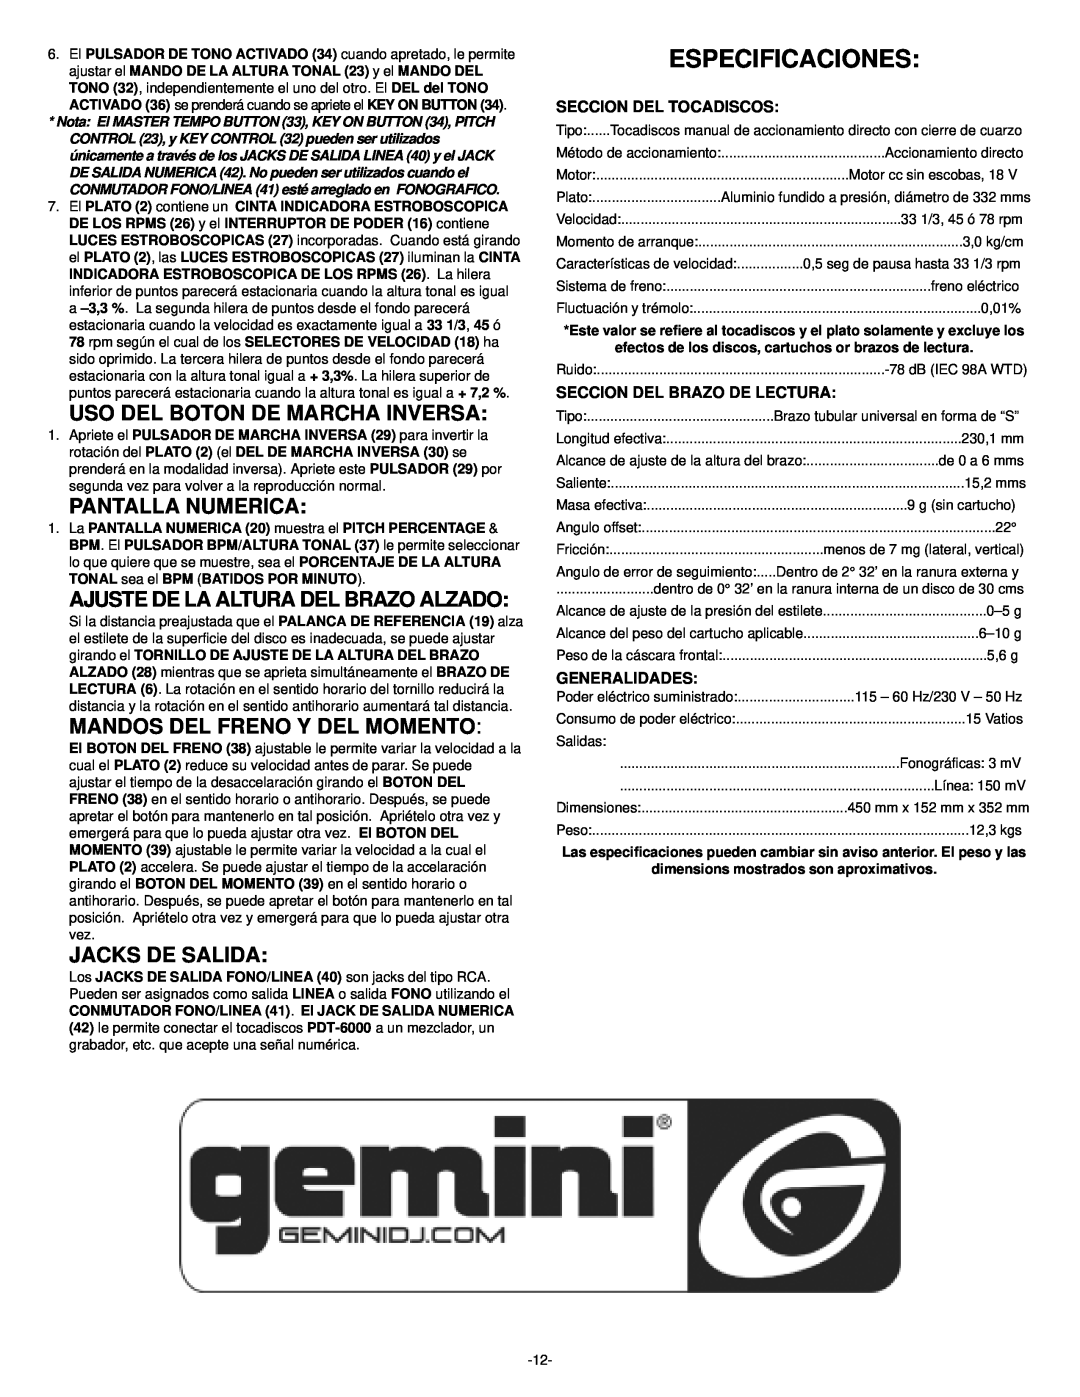 Gemini PDT-6000 Especificaciones, Uso Del Boton De Marcha Inversa, Pantalla Numerica, Ajuste De La Altura Del Brazo Alzado 